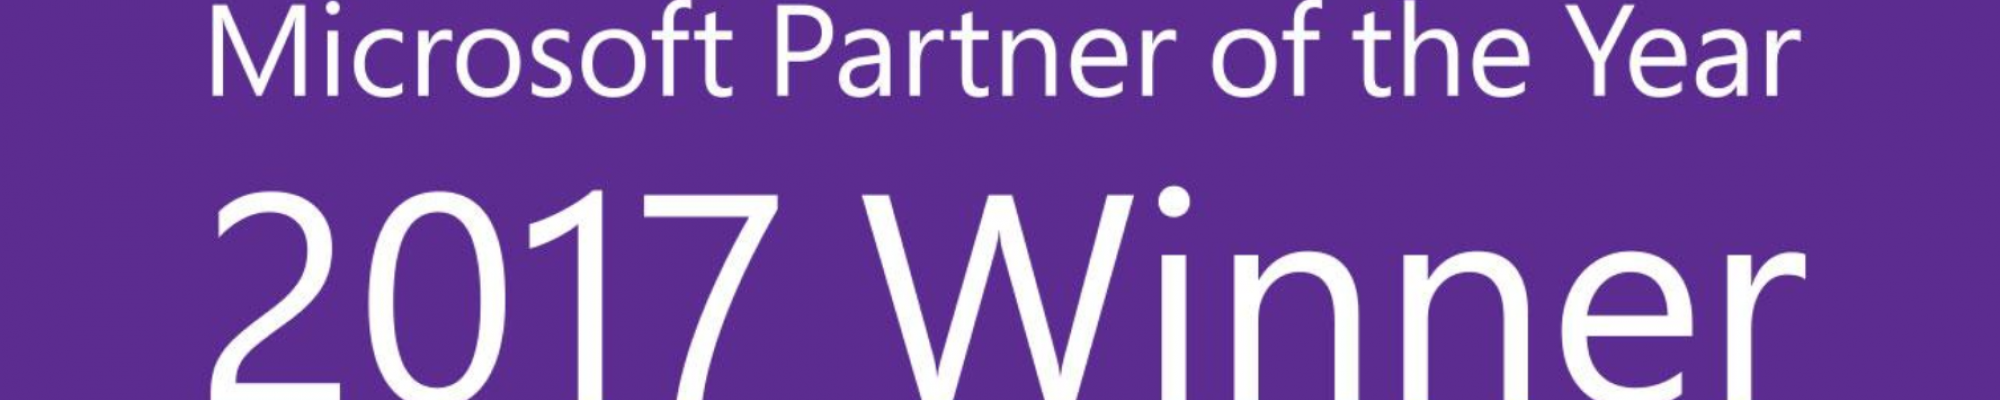 Realdolmen uitgeroepen tot 'Microsoft Country Partner of the Year 2017' voor België